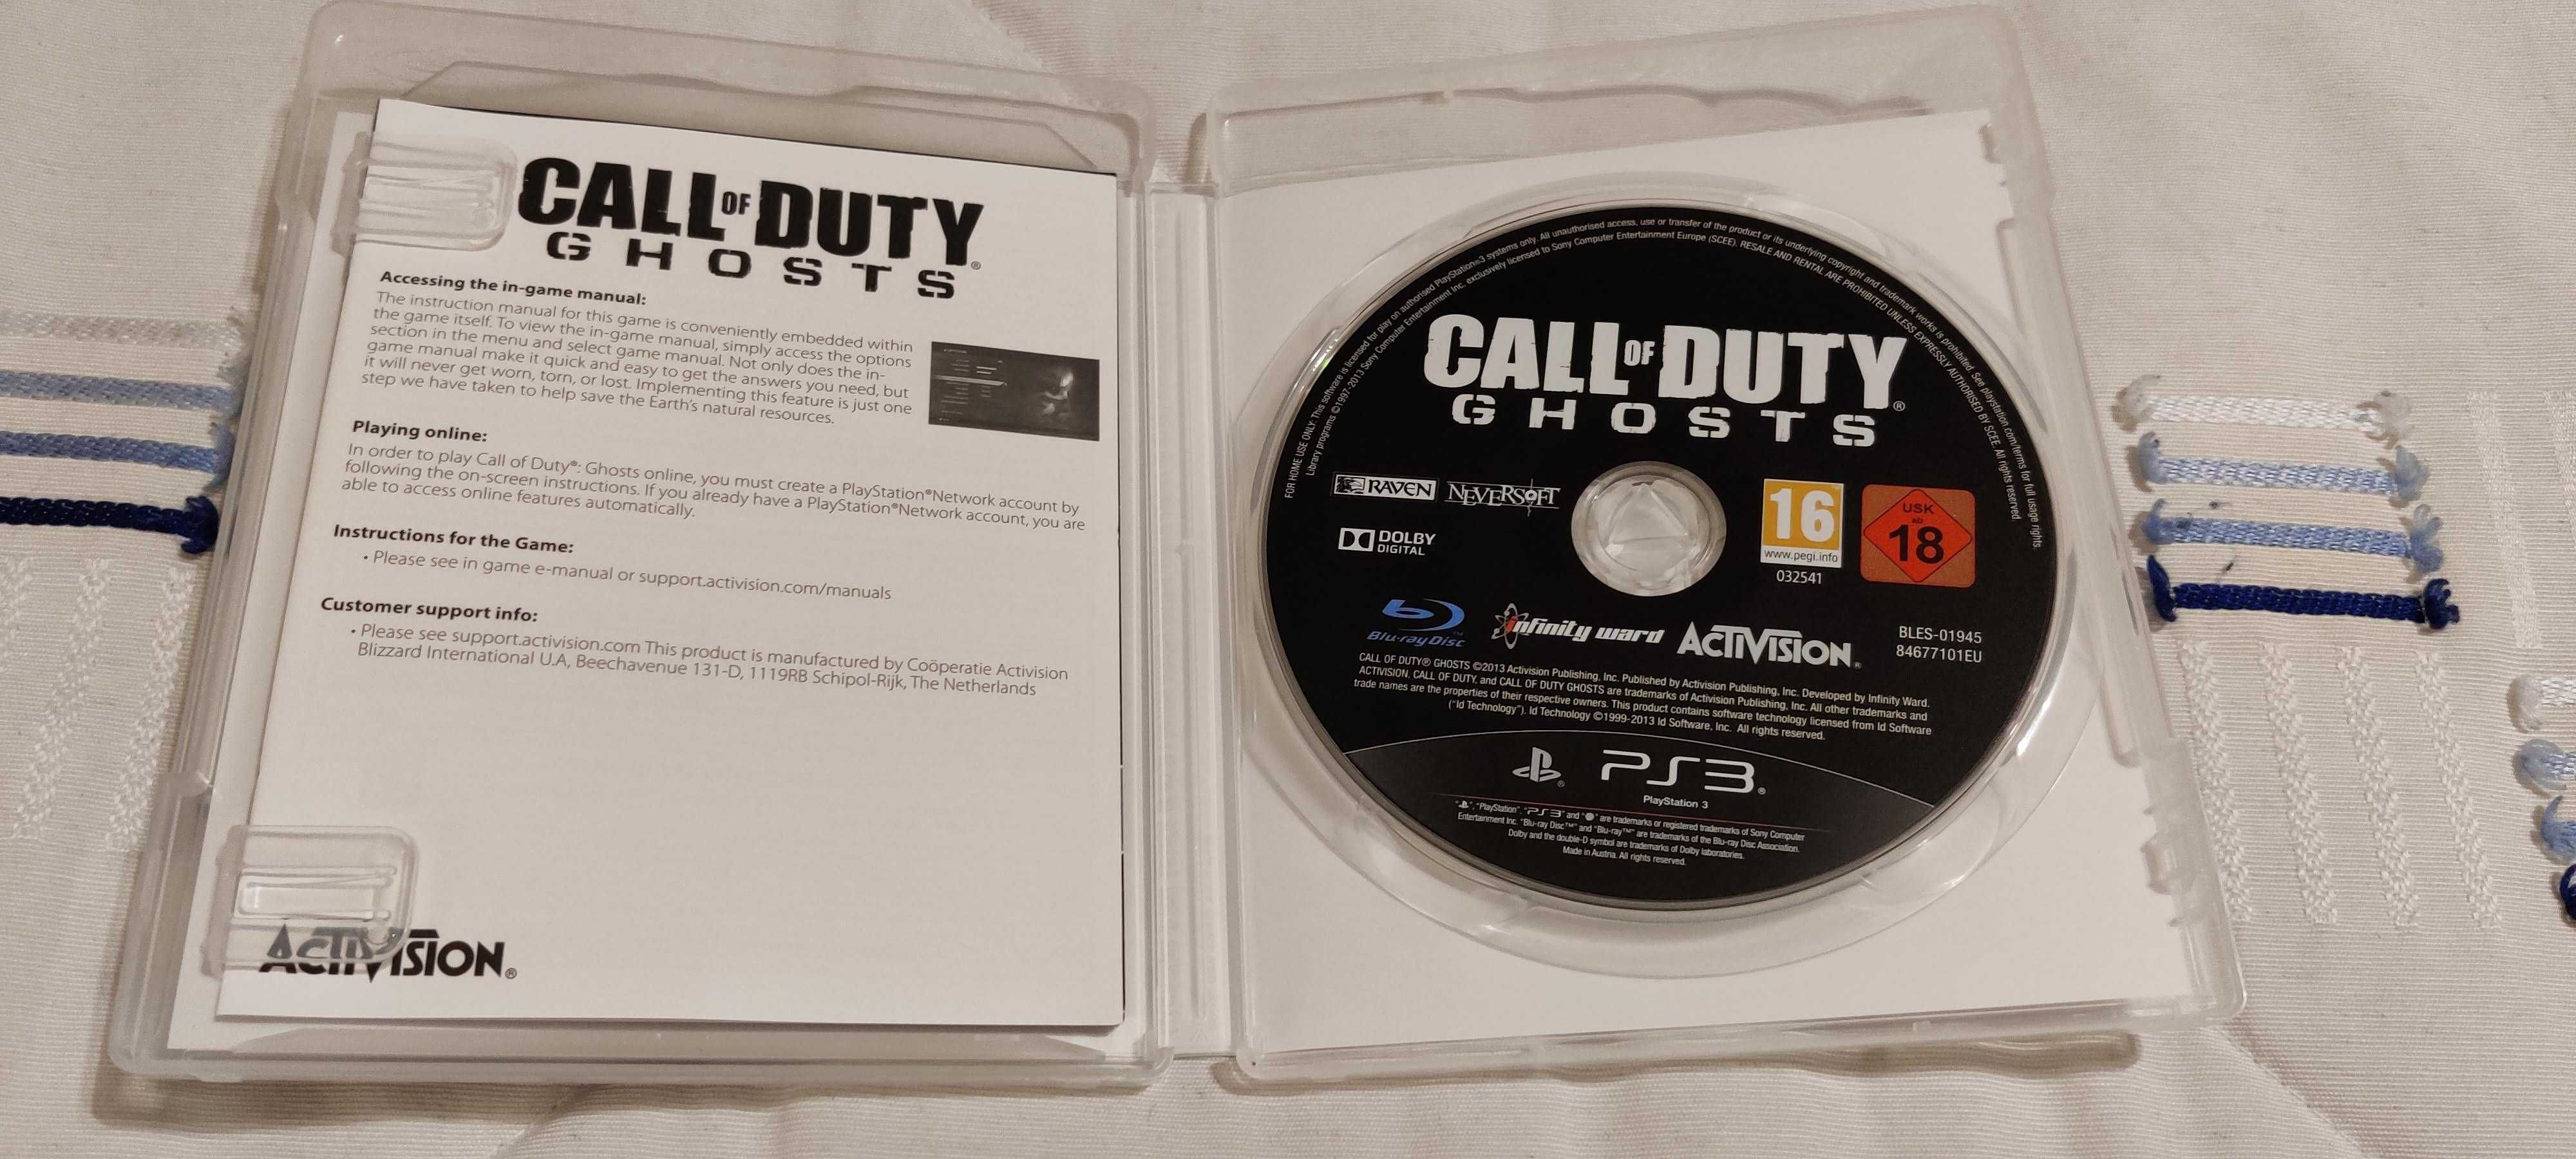 JogoCall of Duty Ghosts Playstation3 como novo